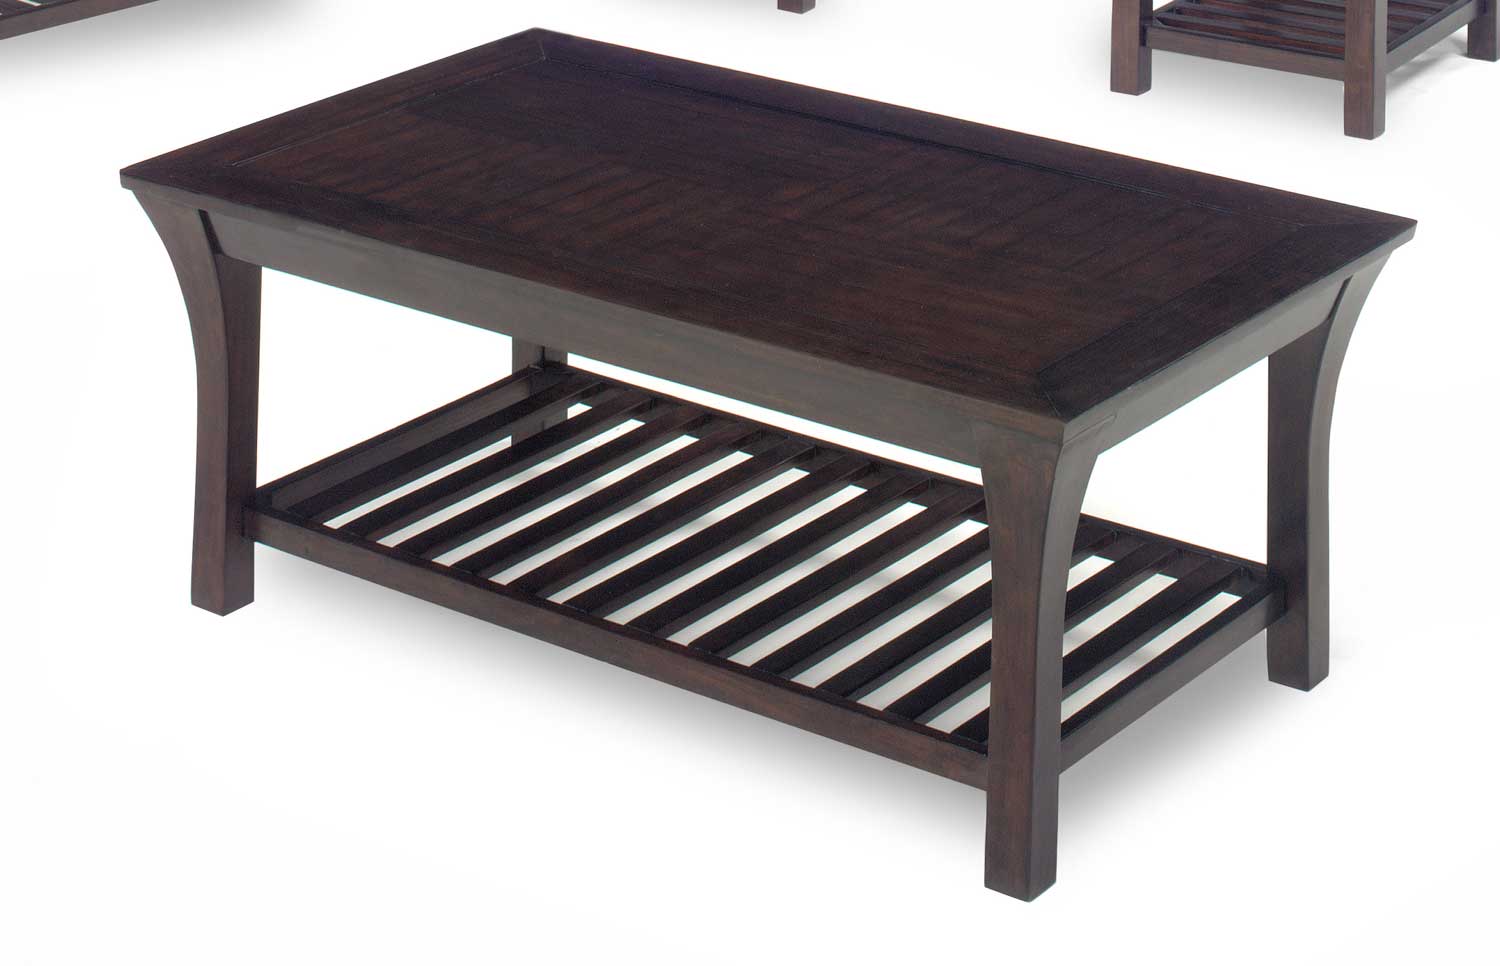 Jackson 813 Series Cocktail Table - Merlot Wood with Slat Shelves